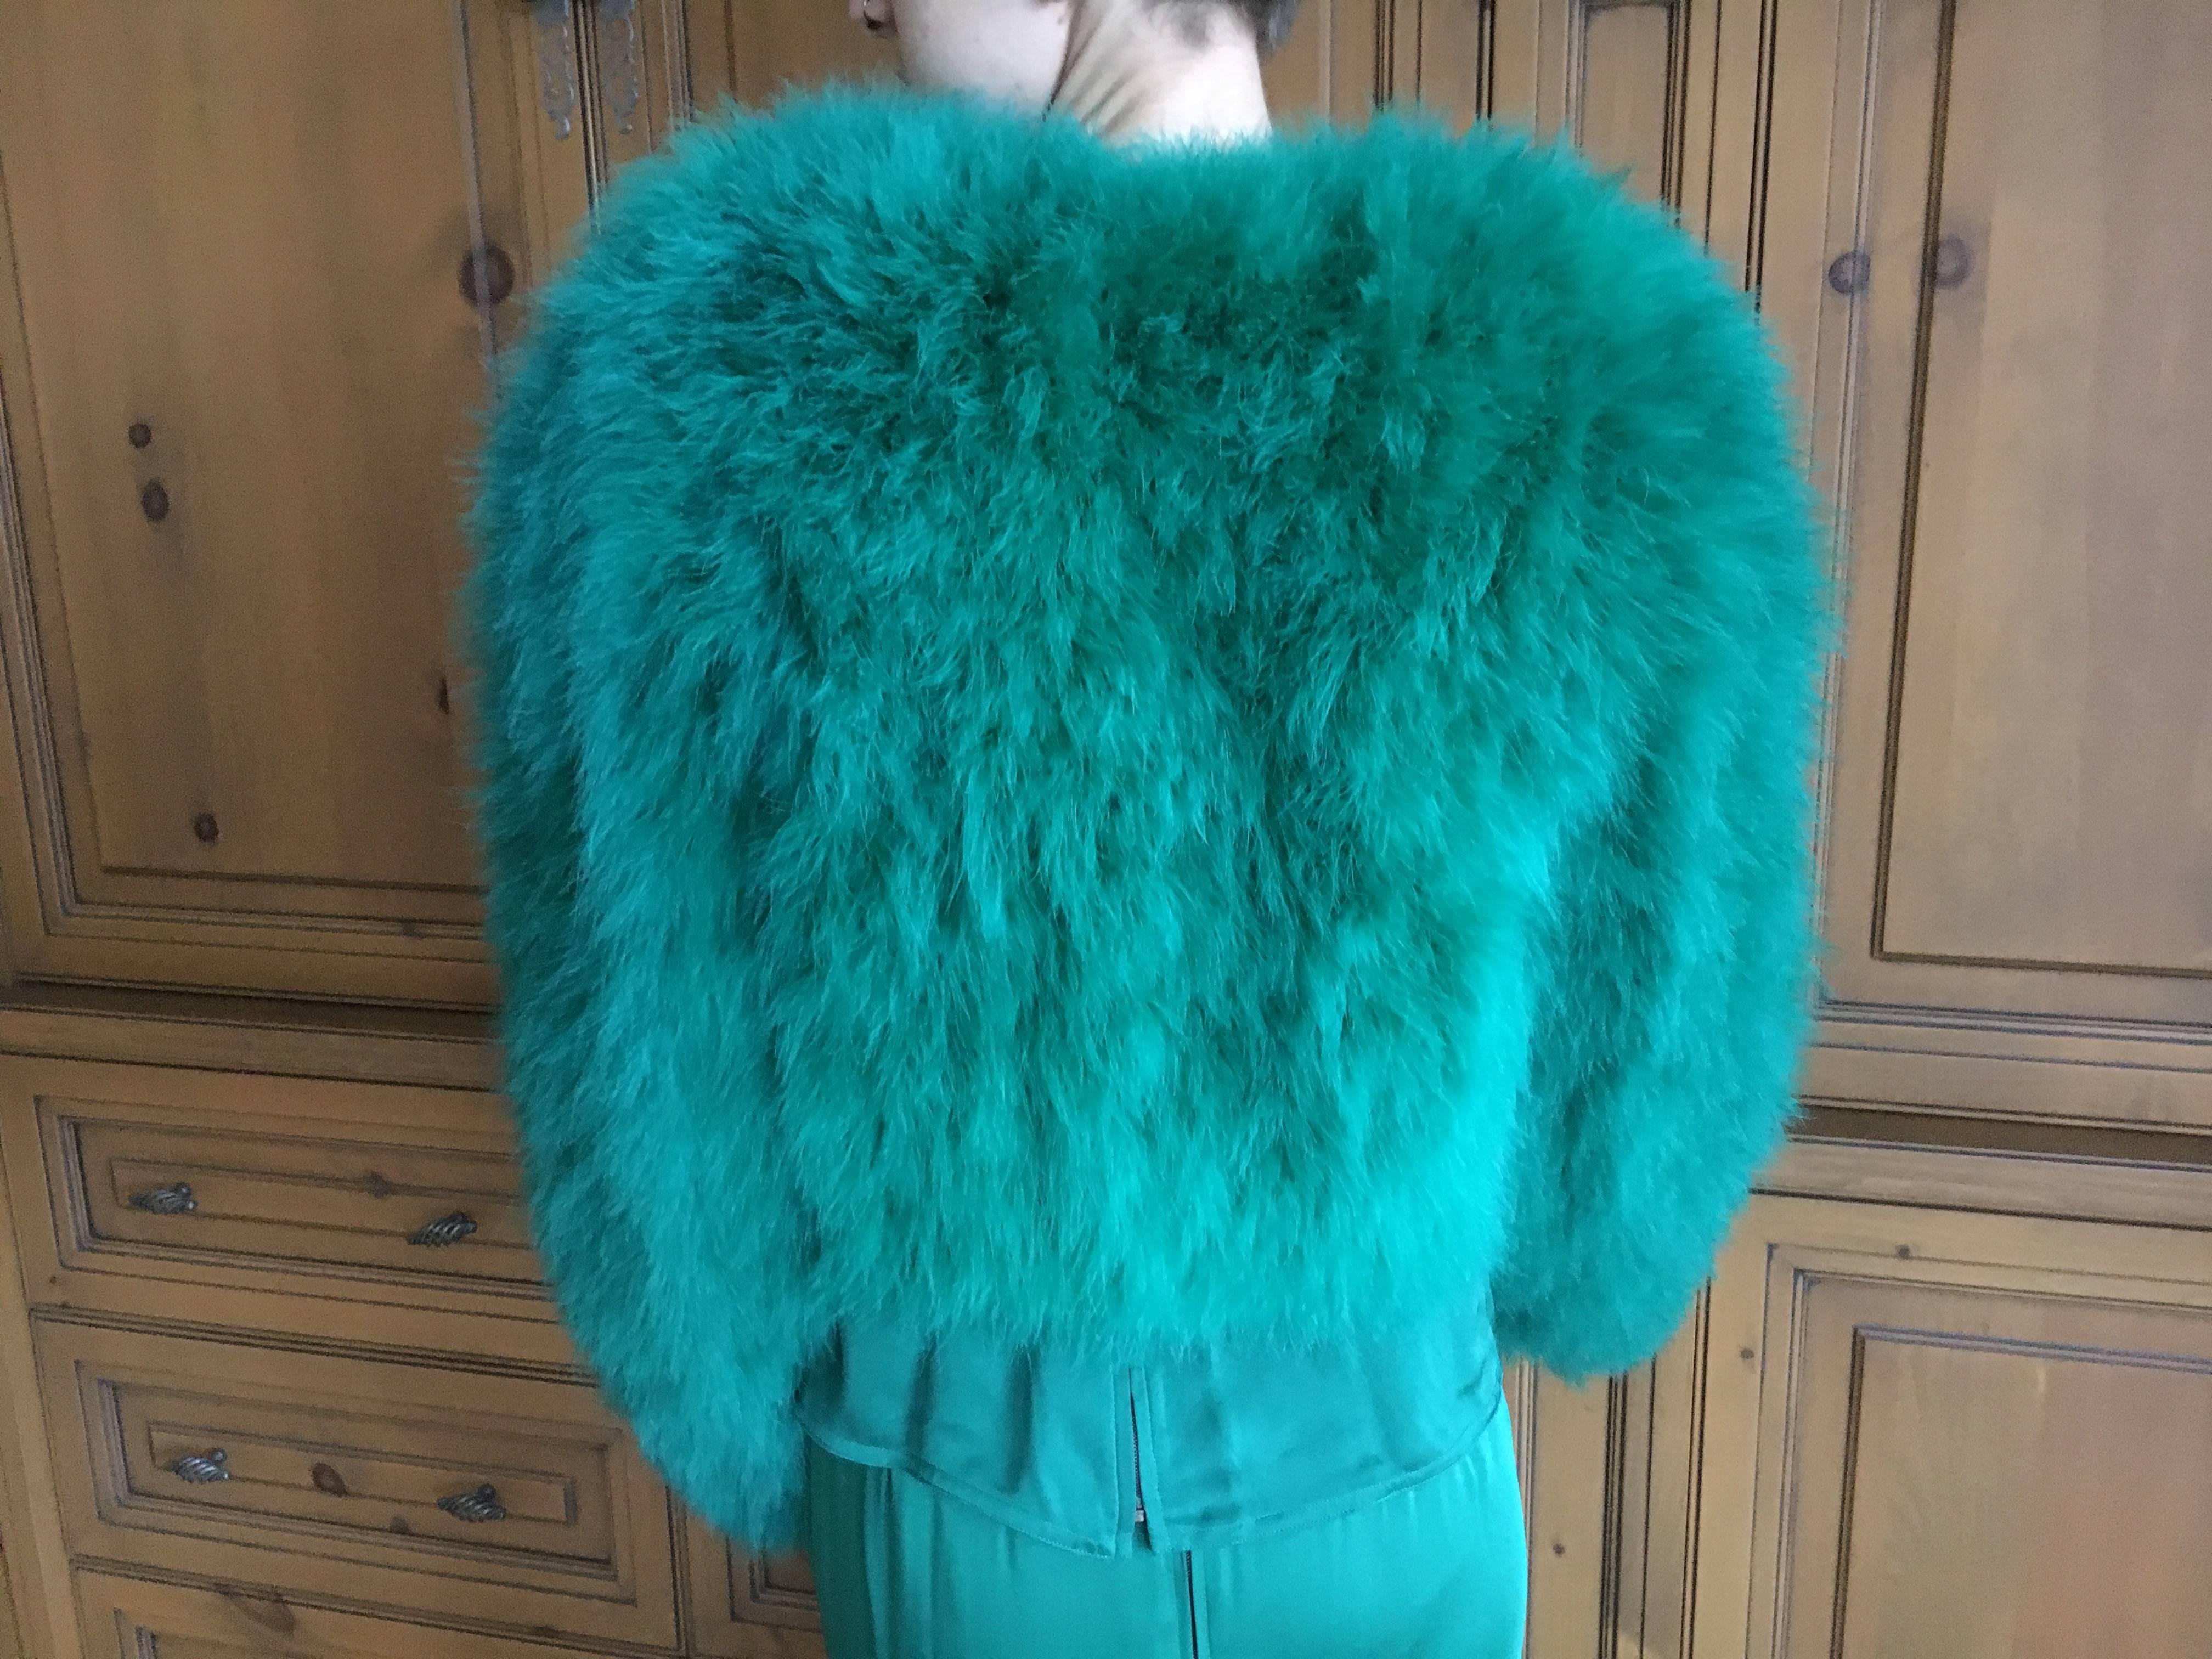  Saint Laurent by Hedi Slimane 2015 Green Turkey Feather Jacket For Sale 2